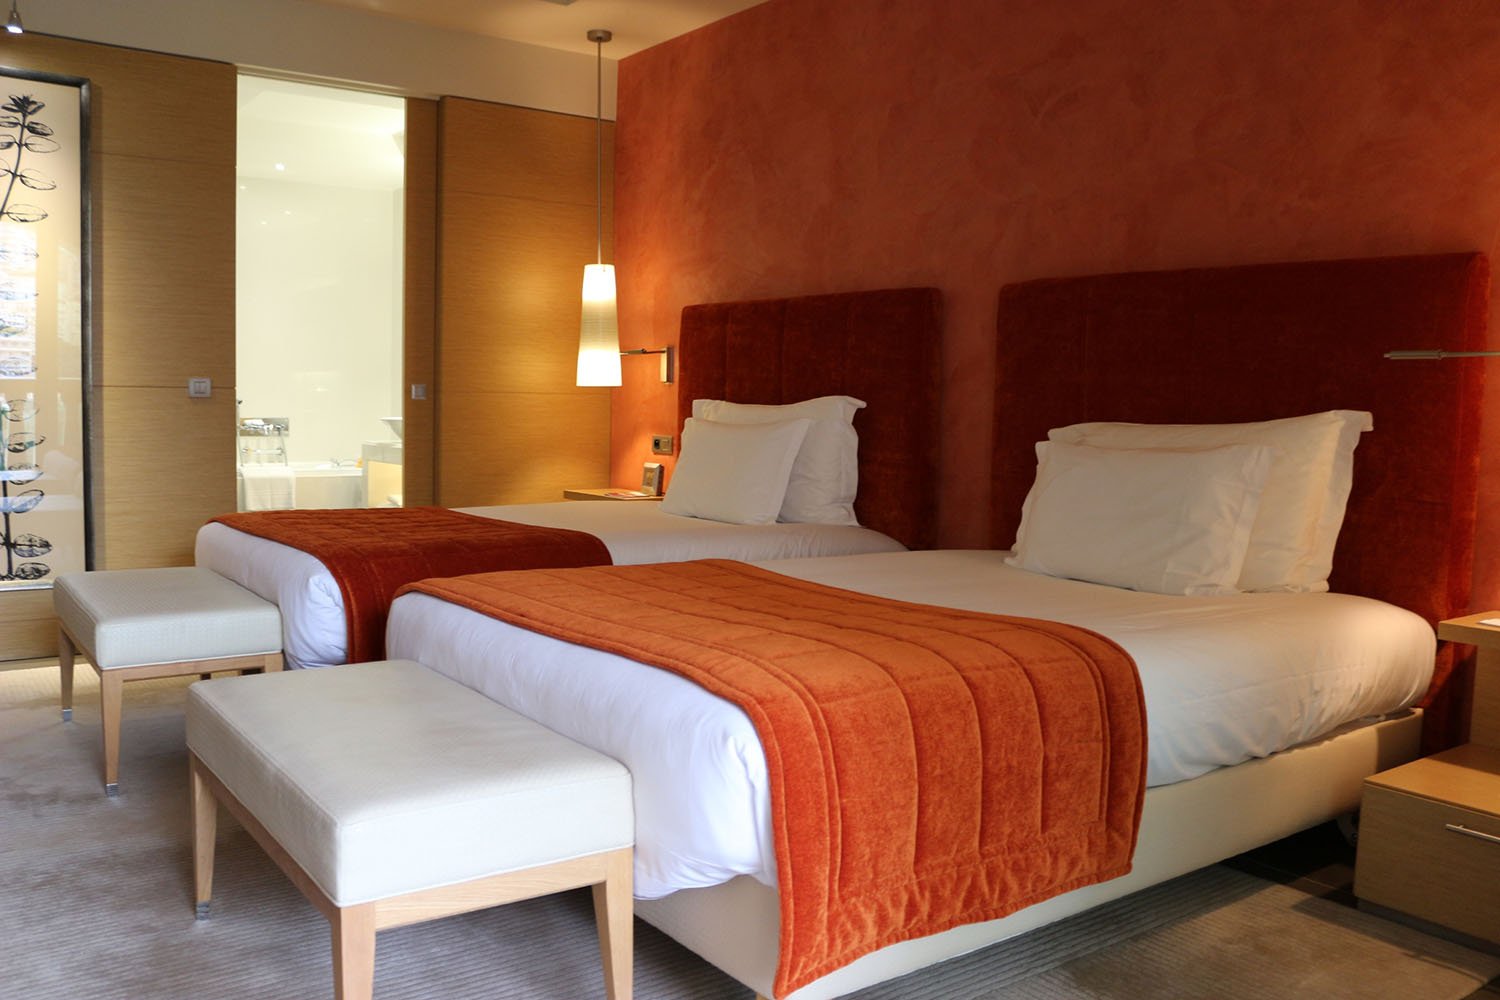 Monte Carlo Bay Hotel Review